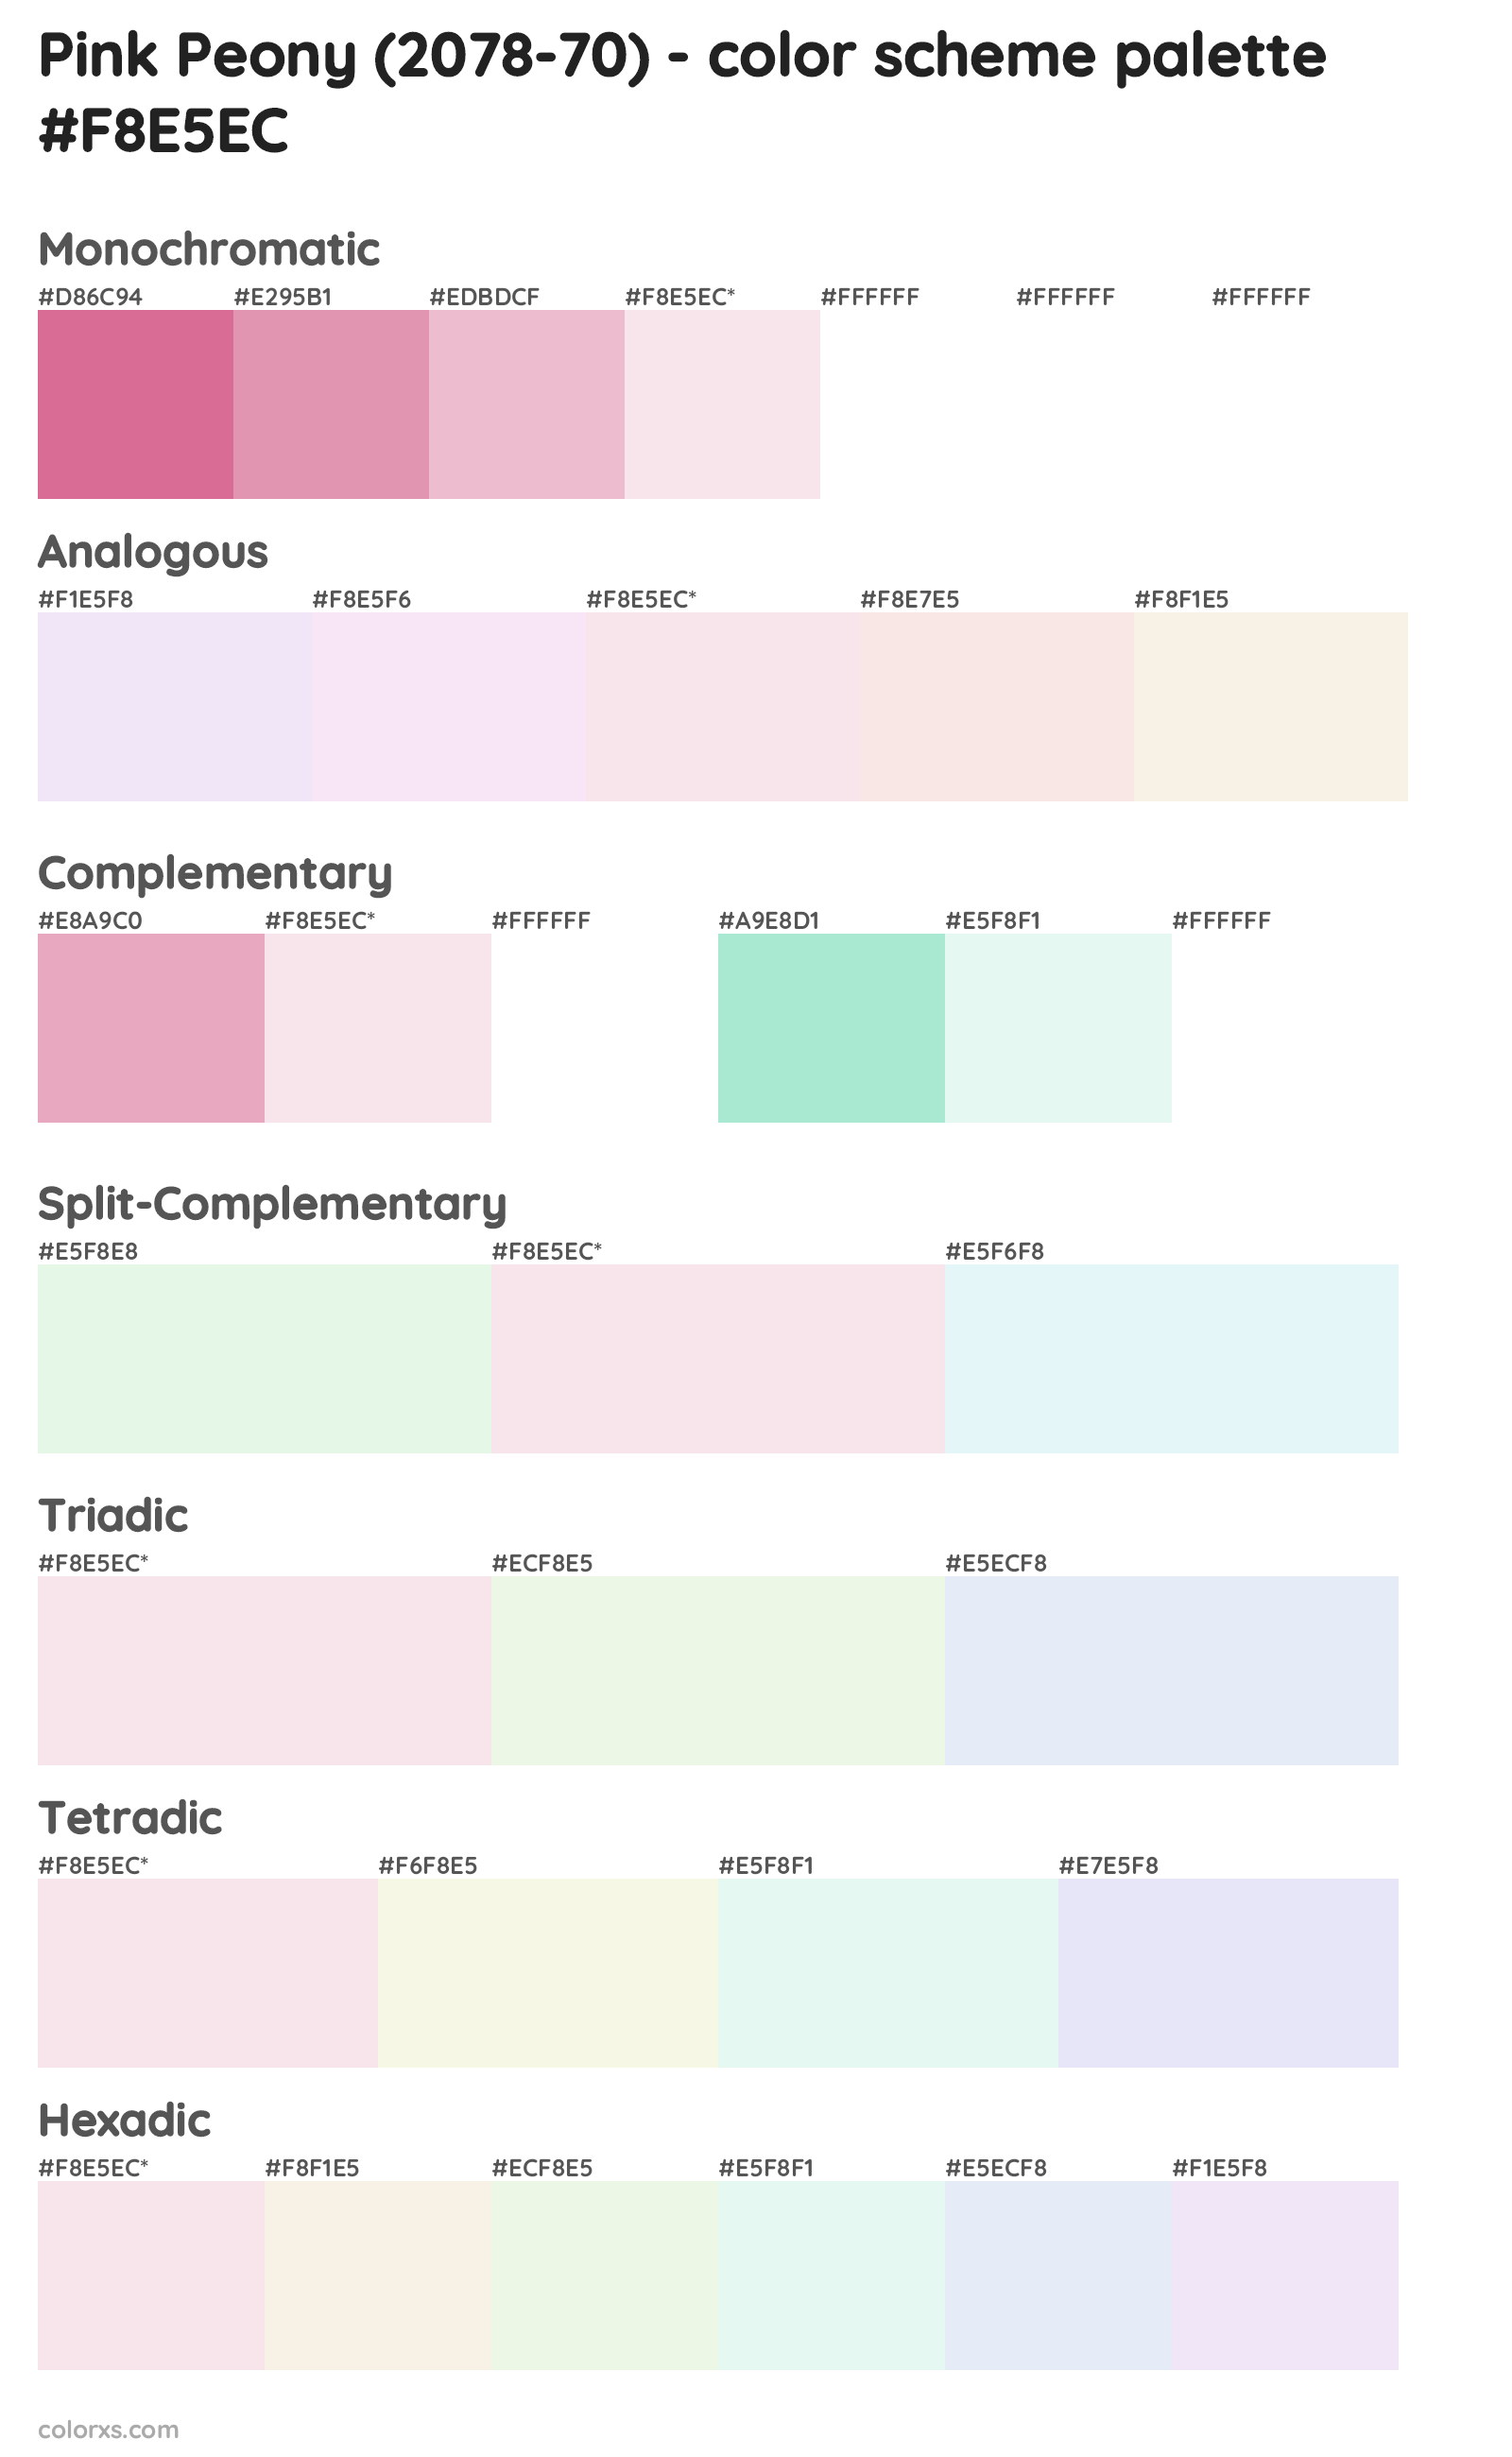 Pink Peony (2078-70) Color Scheme Palettes